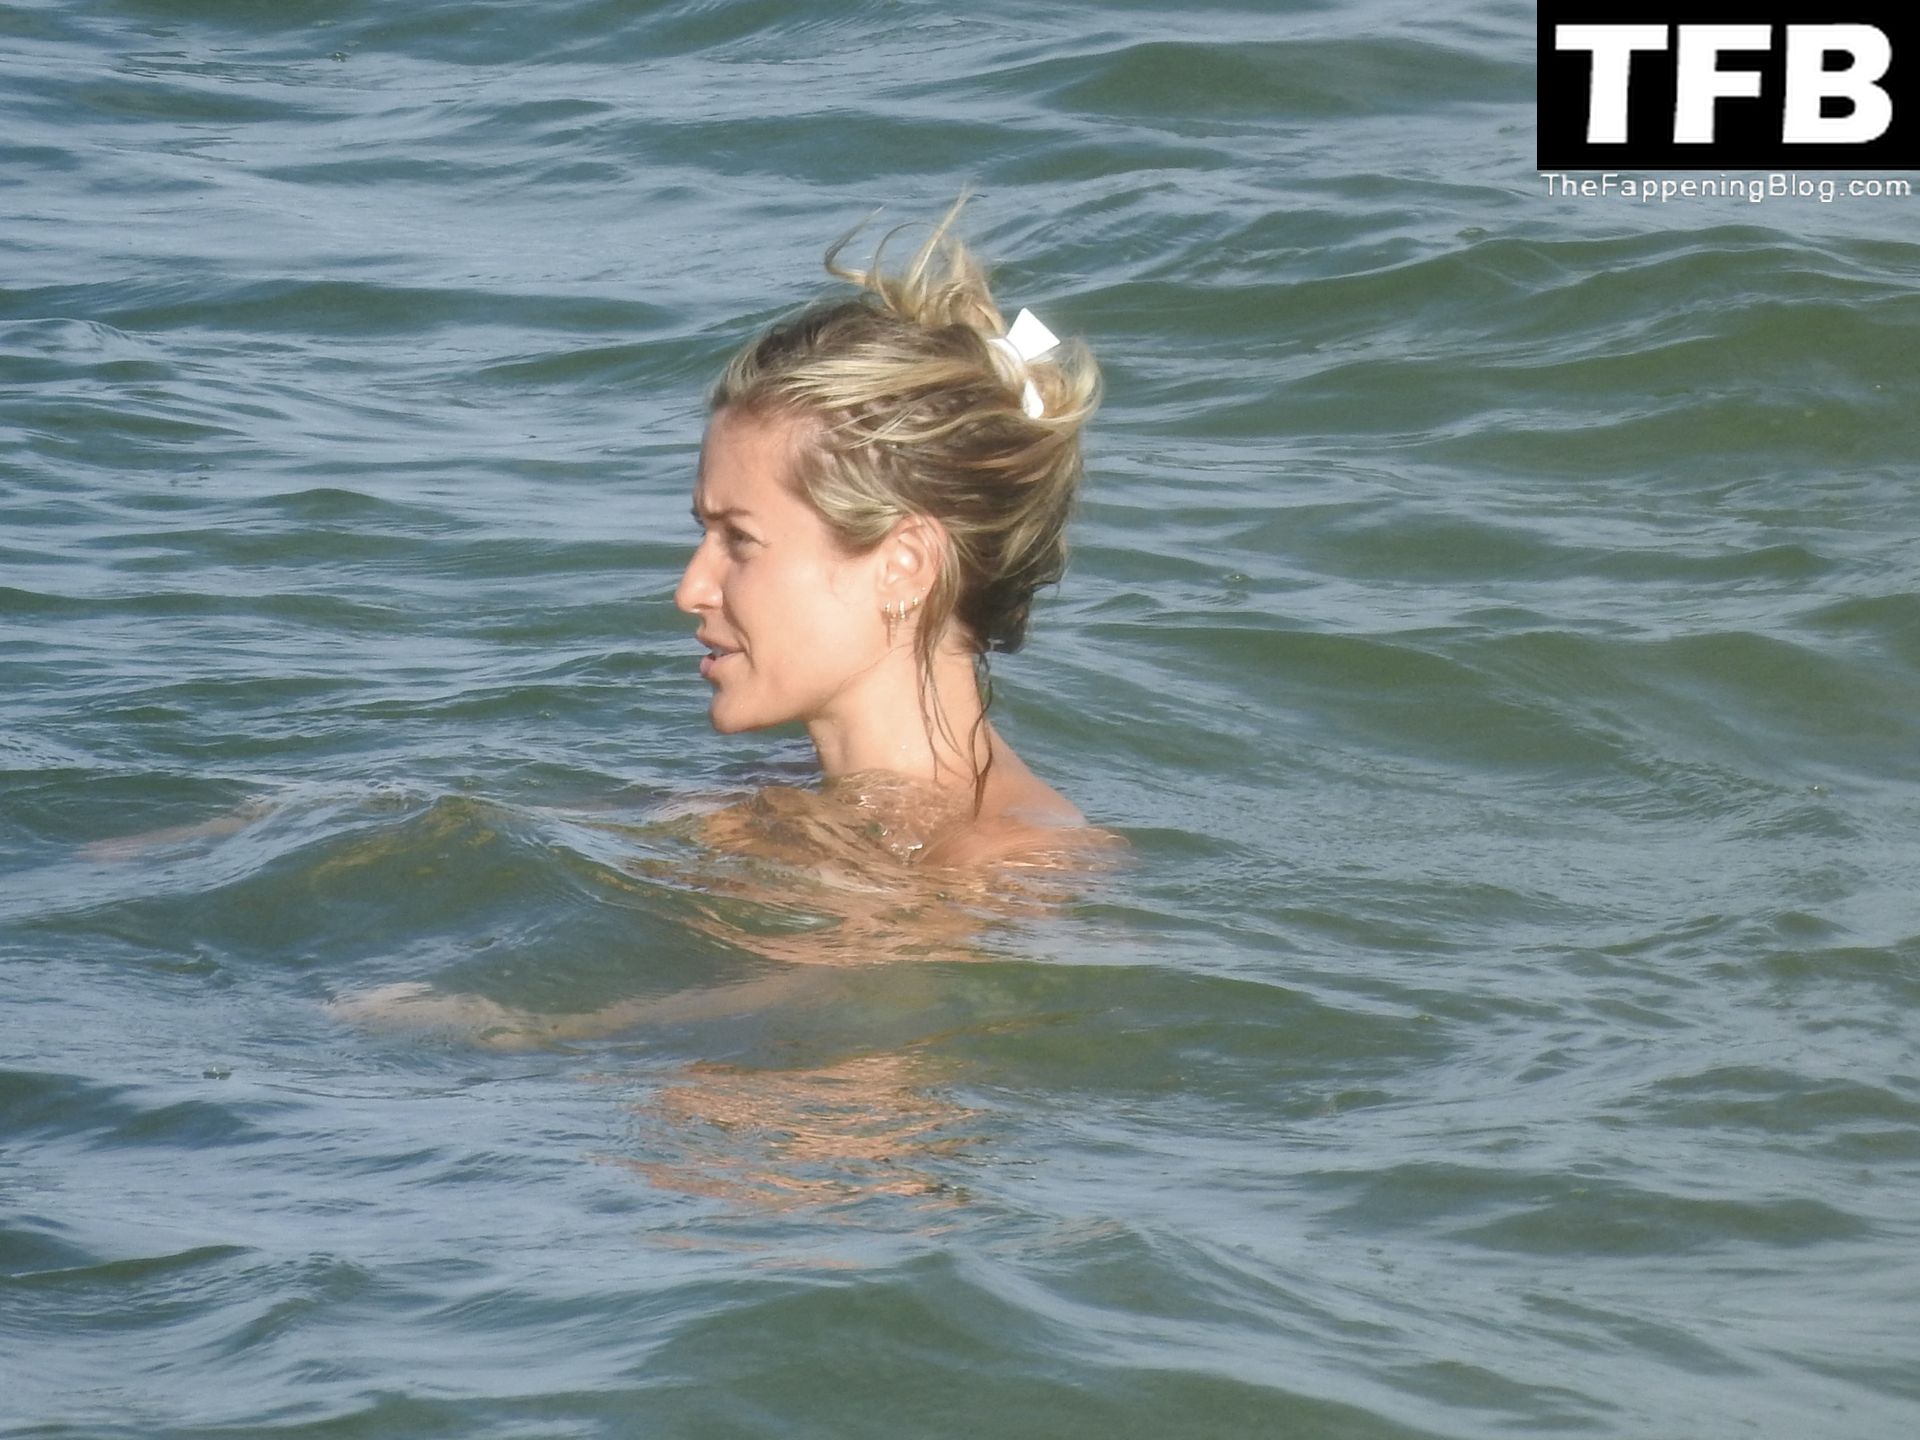 Kristin Cavallari Looks Incredible as She Takes a Dip in the Ocean in a Whi...